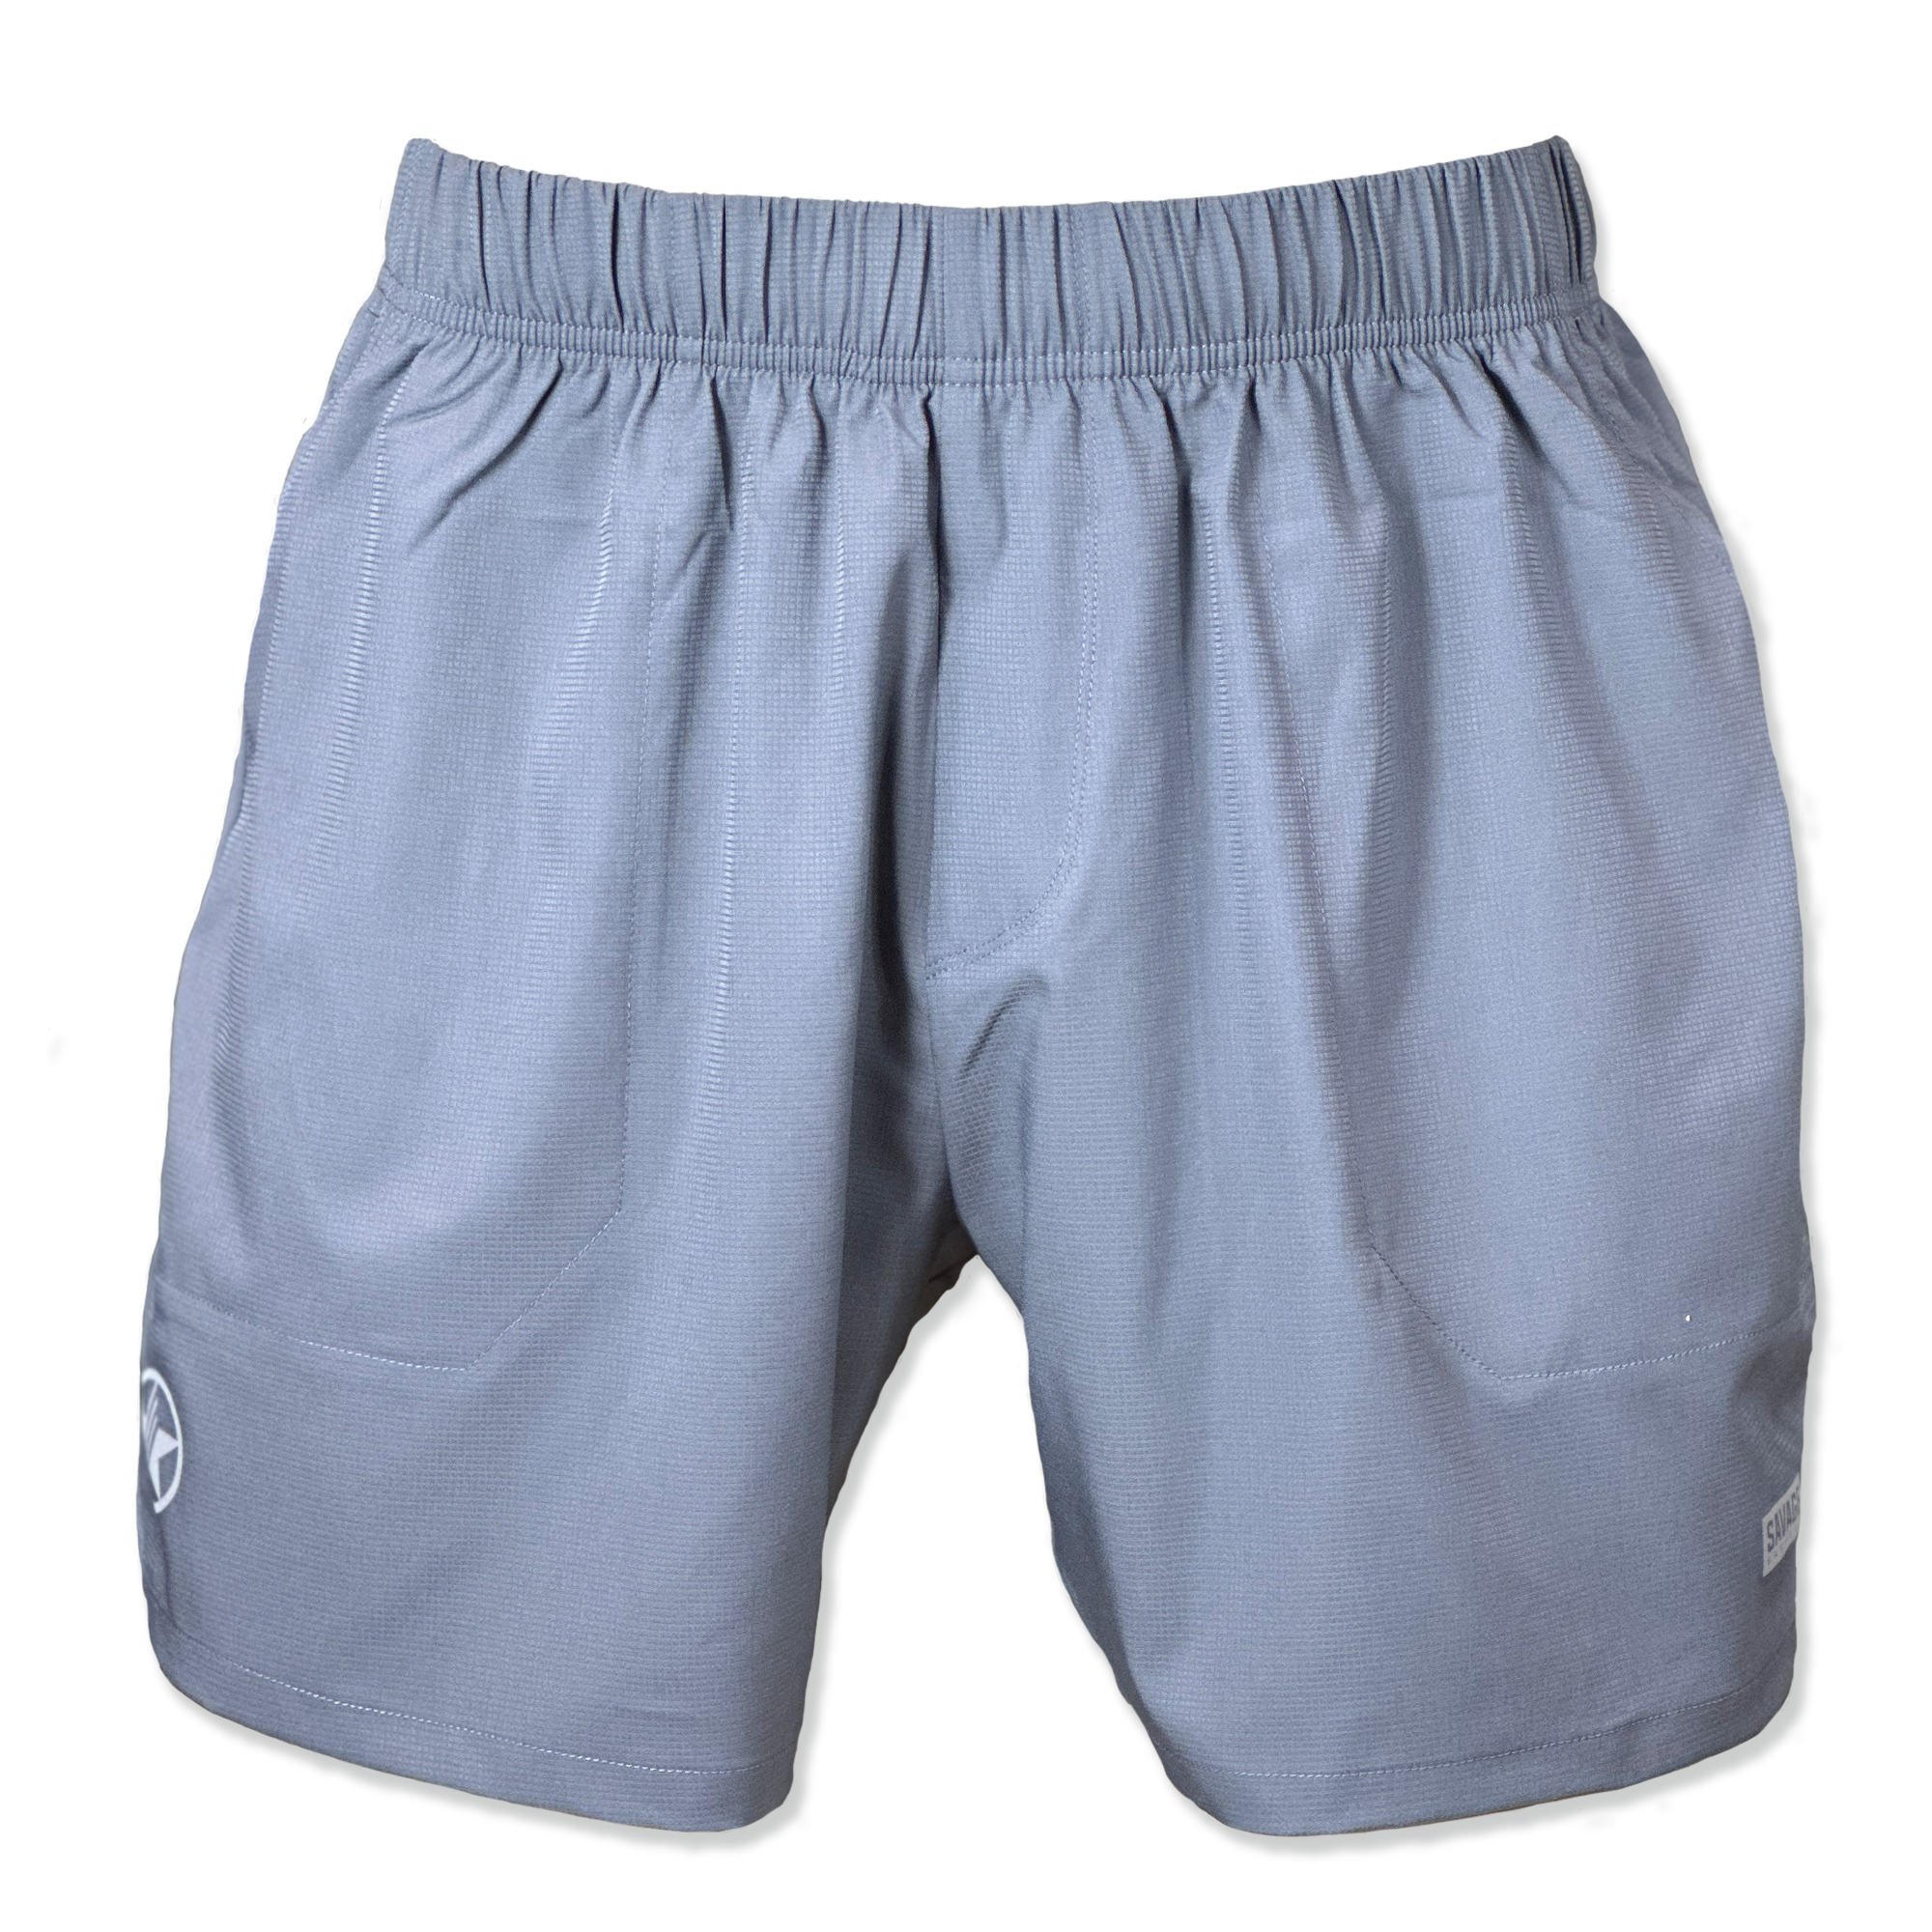 Men's Shorts - Competition 3.0 - Flint Gray, 2X-Large / Flint Gray